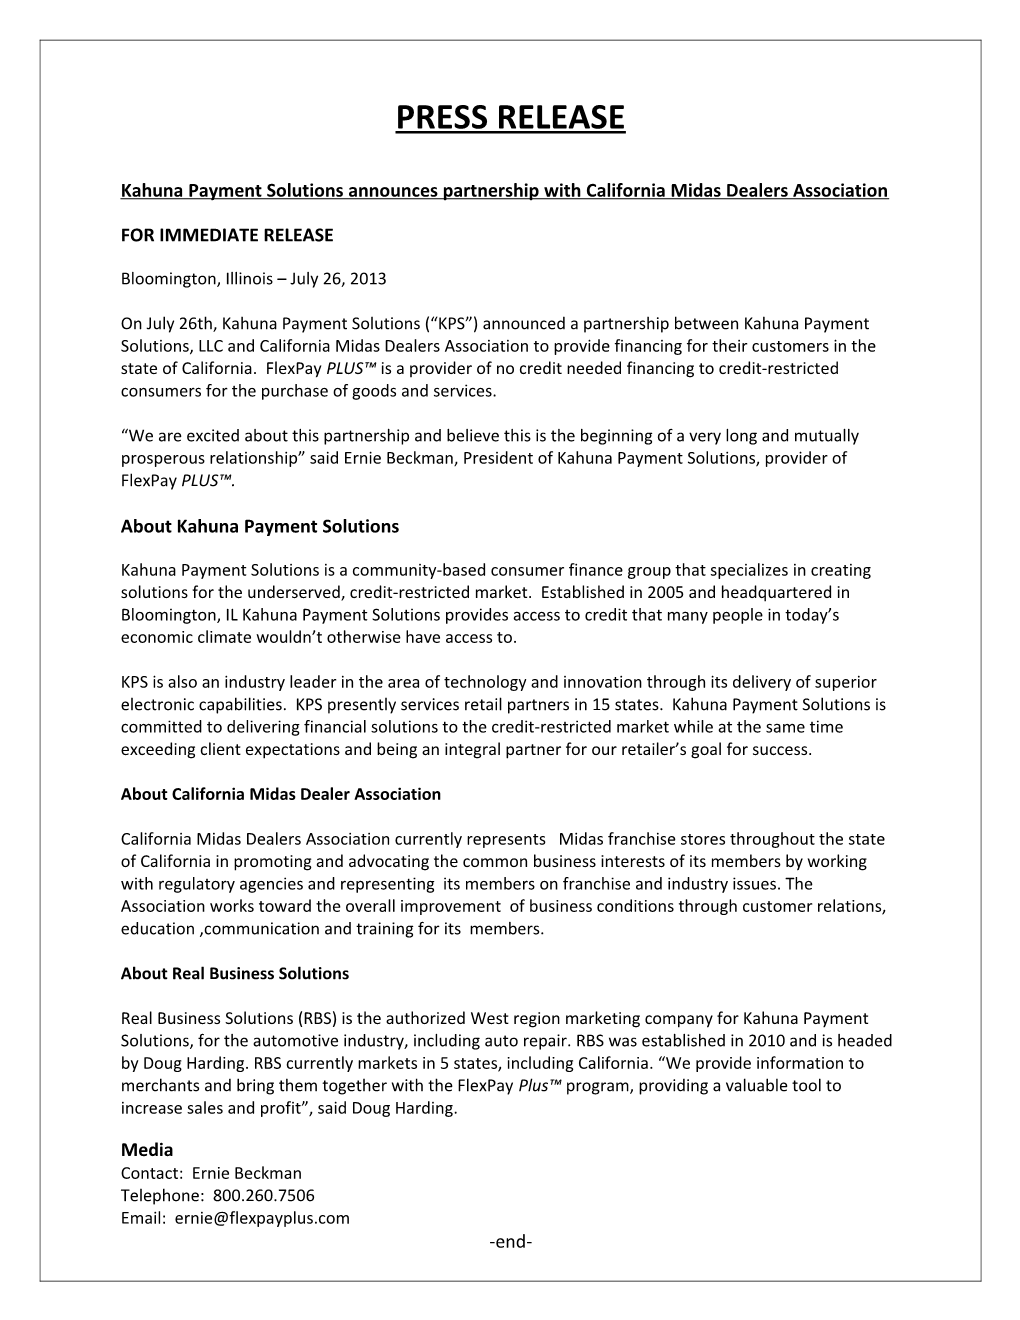 Kahuna Payment Solutions Announces Partnership with California Midas Dealers Association